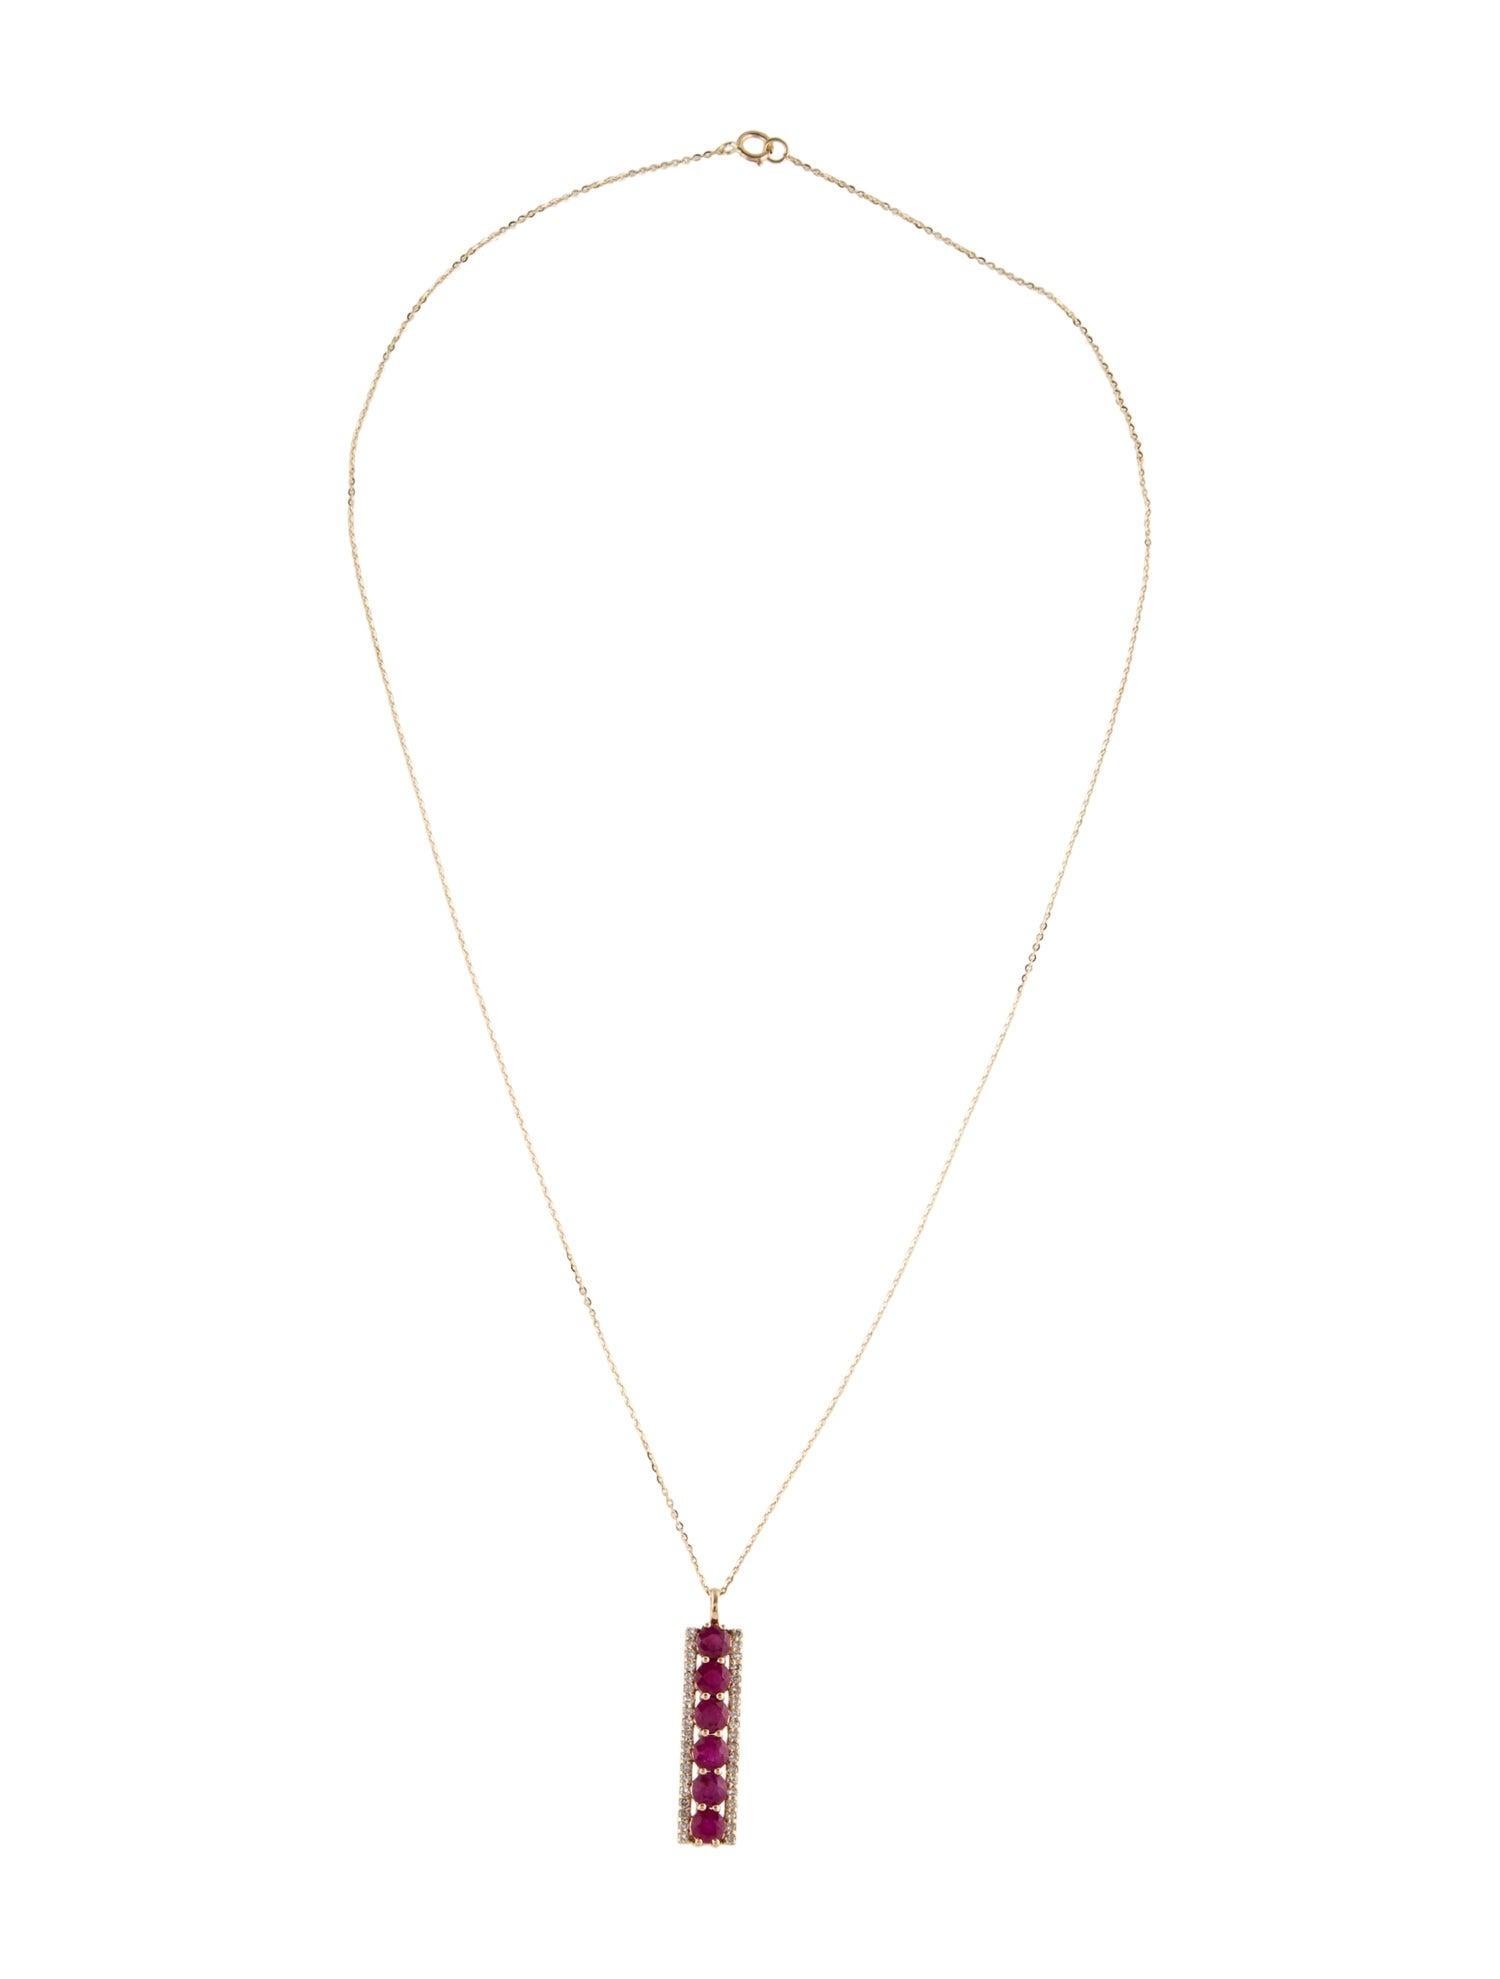 Brilliant Cut 14K Ruby & Diamond Pendant Necklace: Timeless Elegance, Luxury Statement Jewelry For Sale